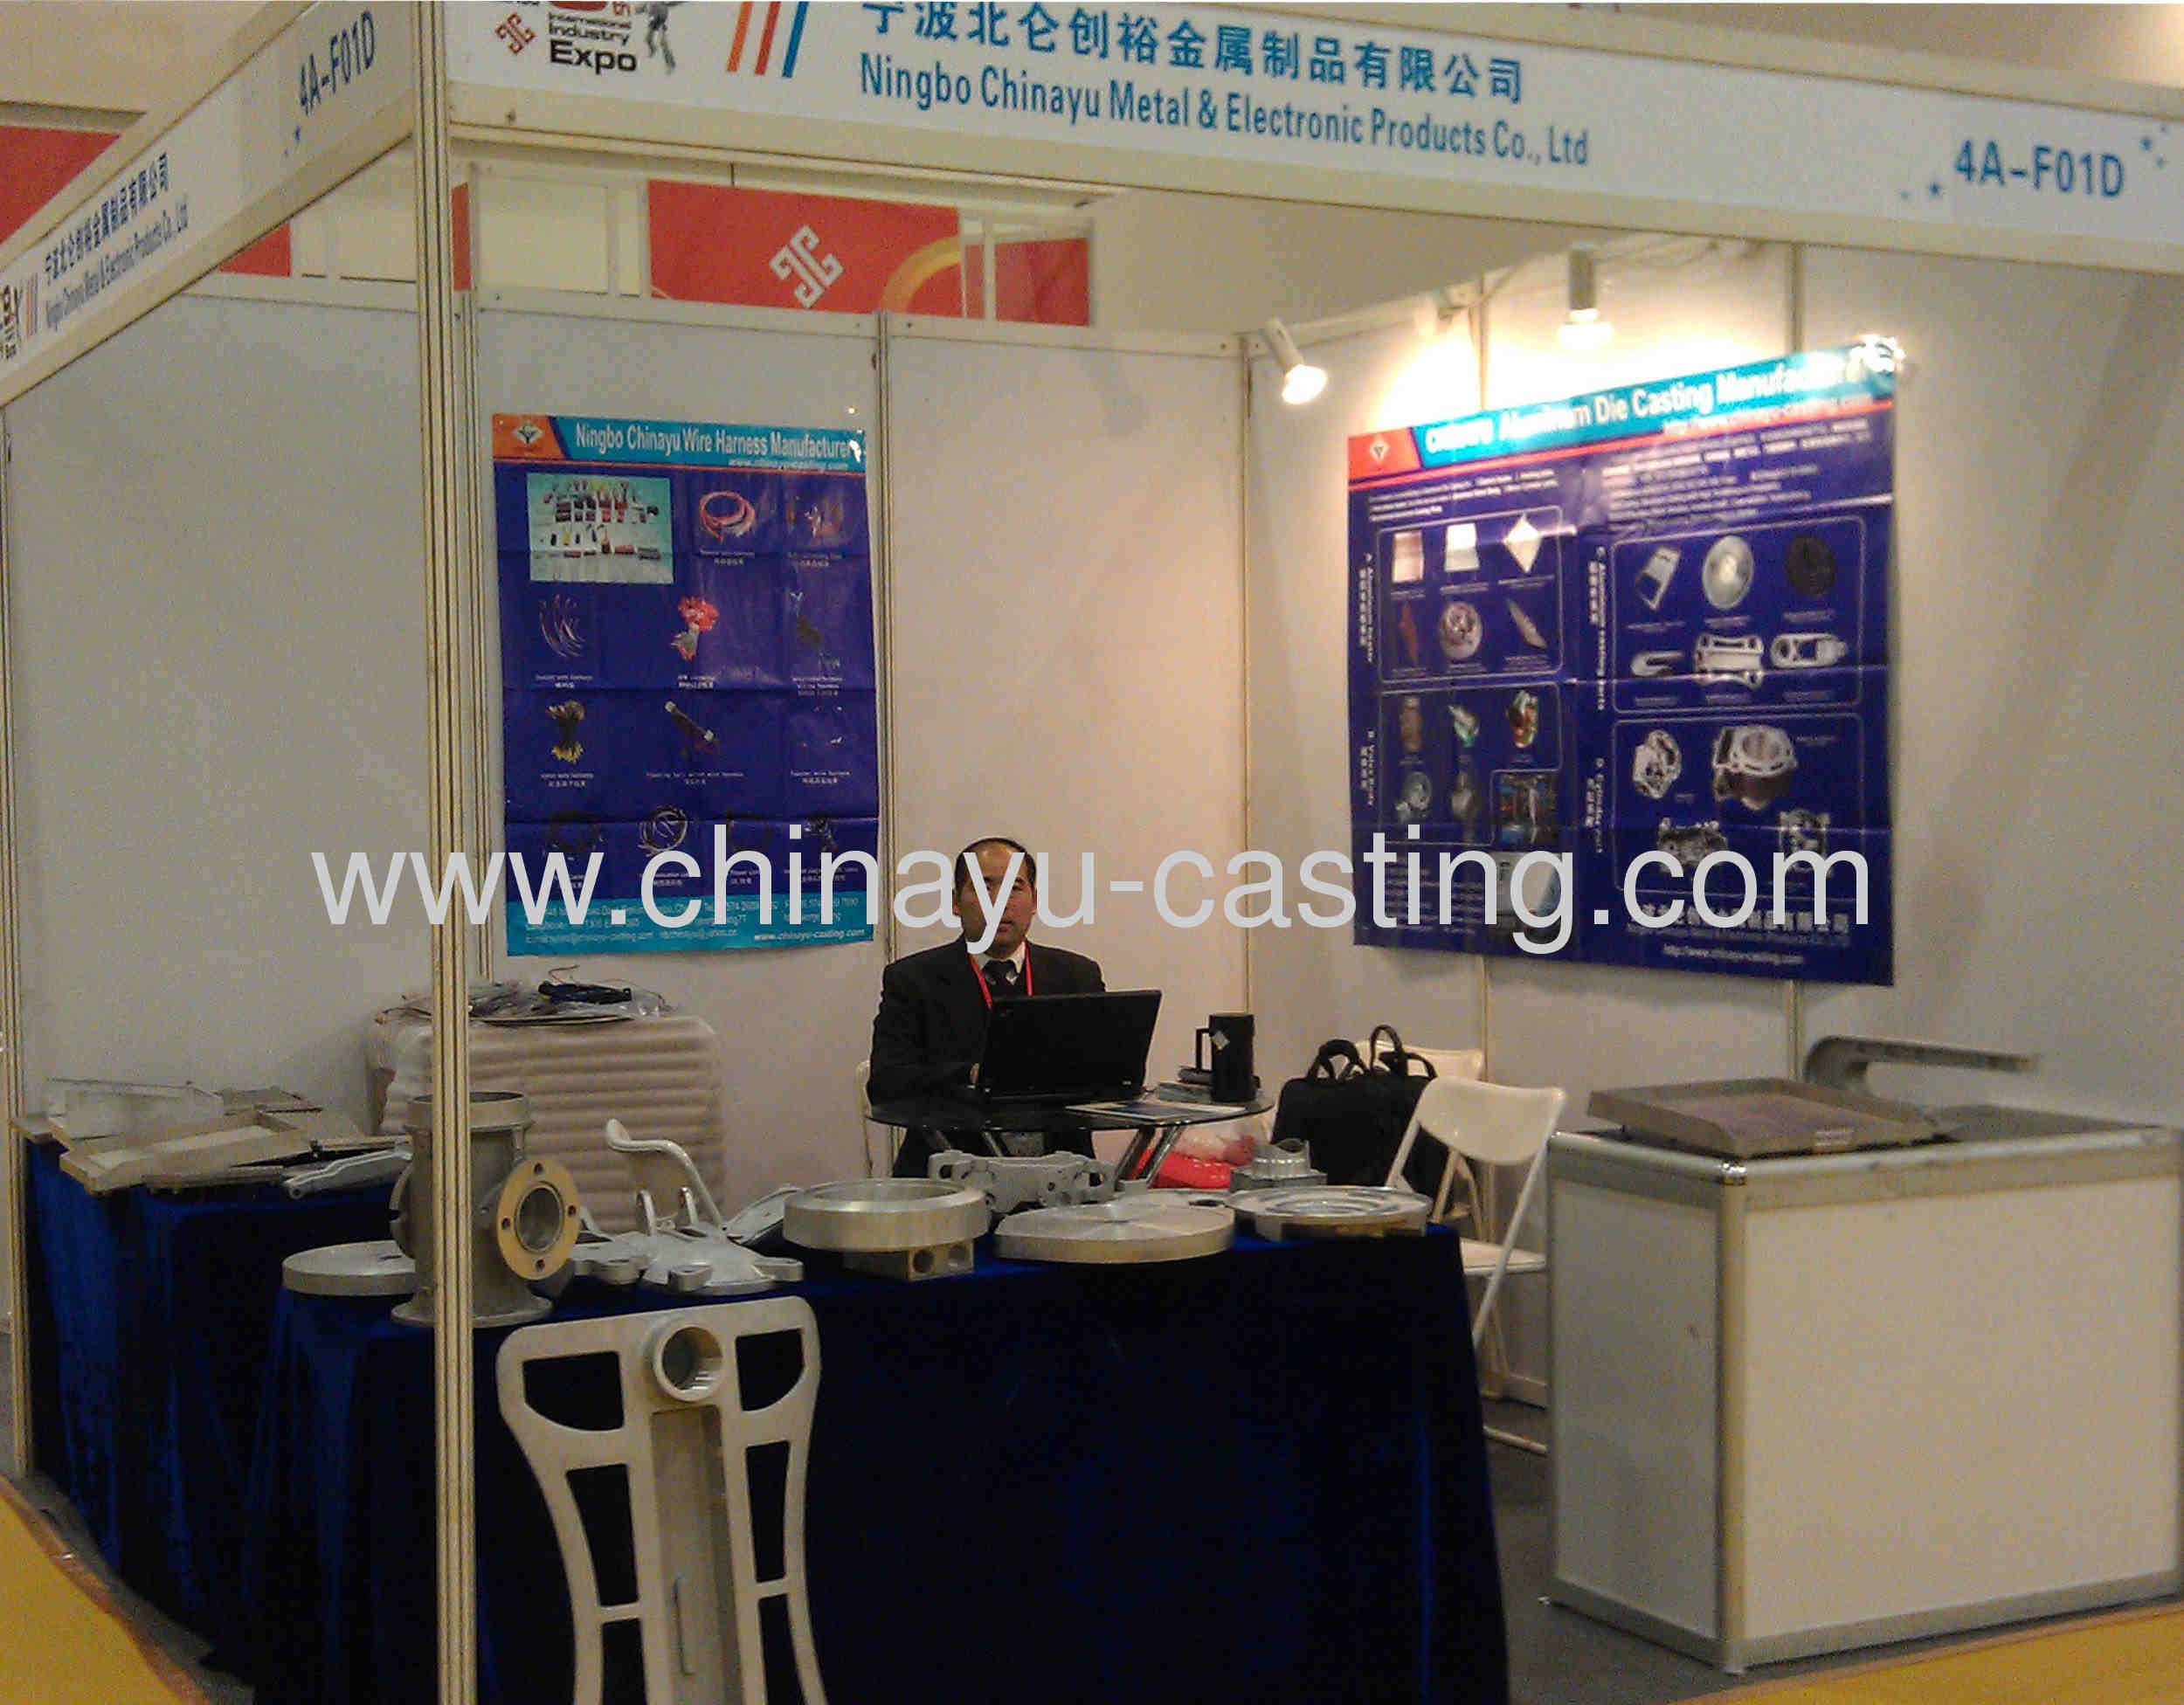 The 5th Suzhou International Die-casting Exhibition